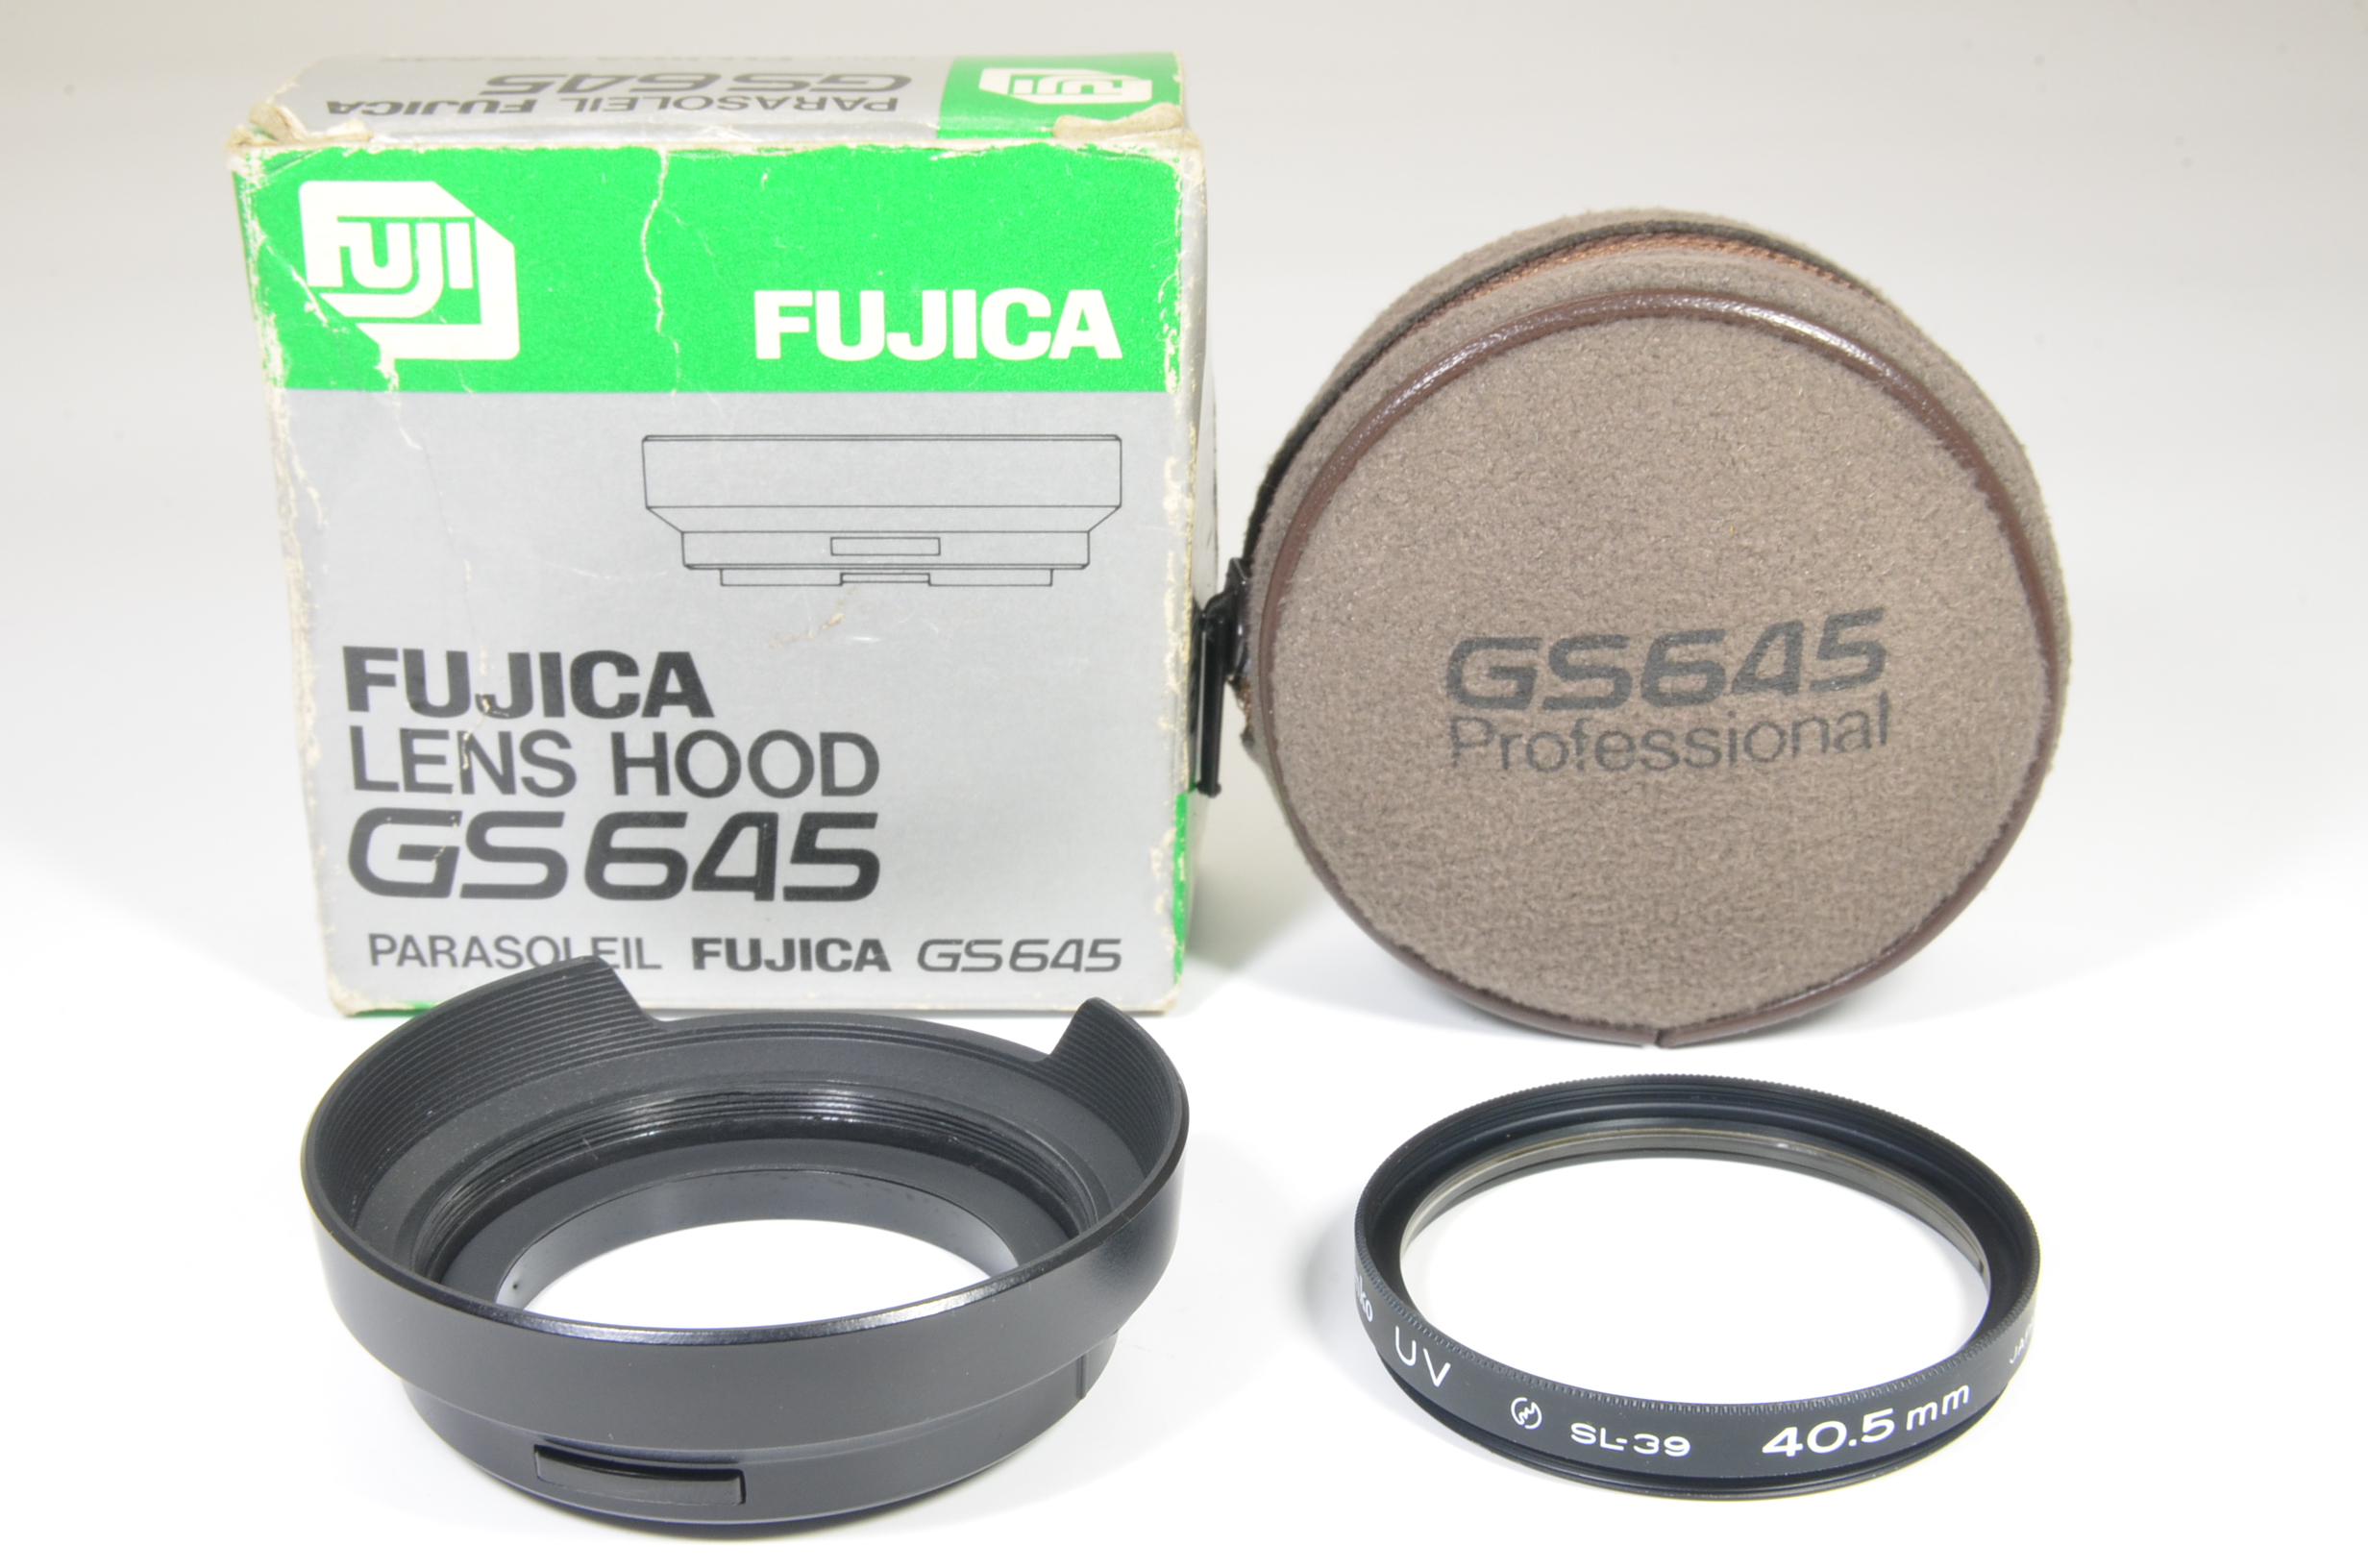 fujifilm fuji fujica gs645 lens hood and lens filter for gs645